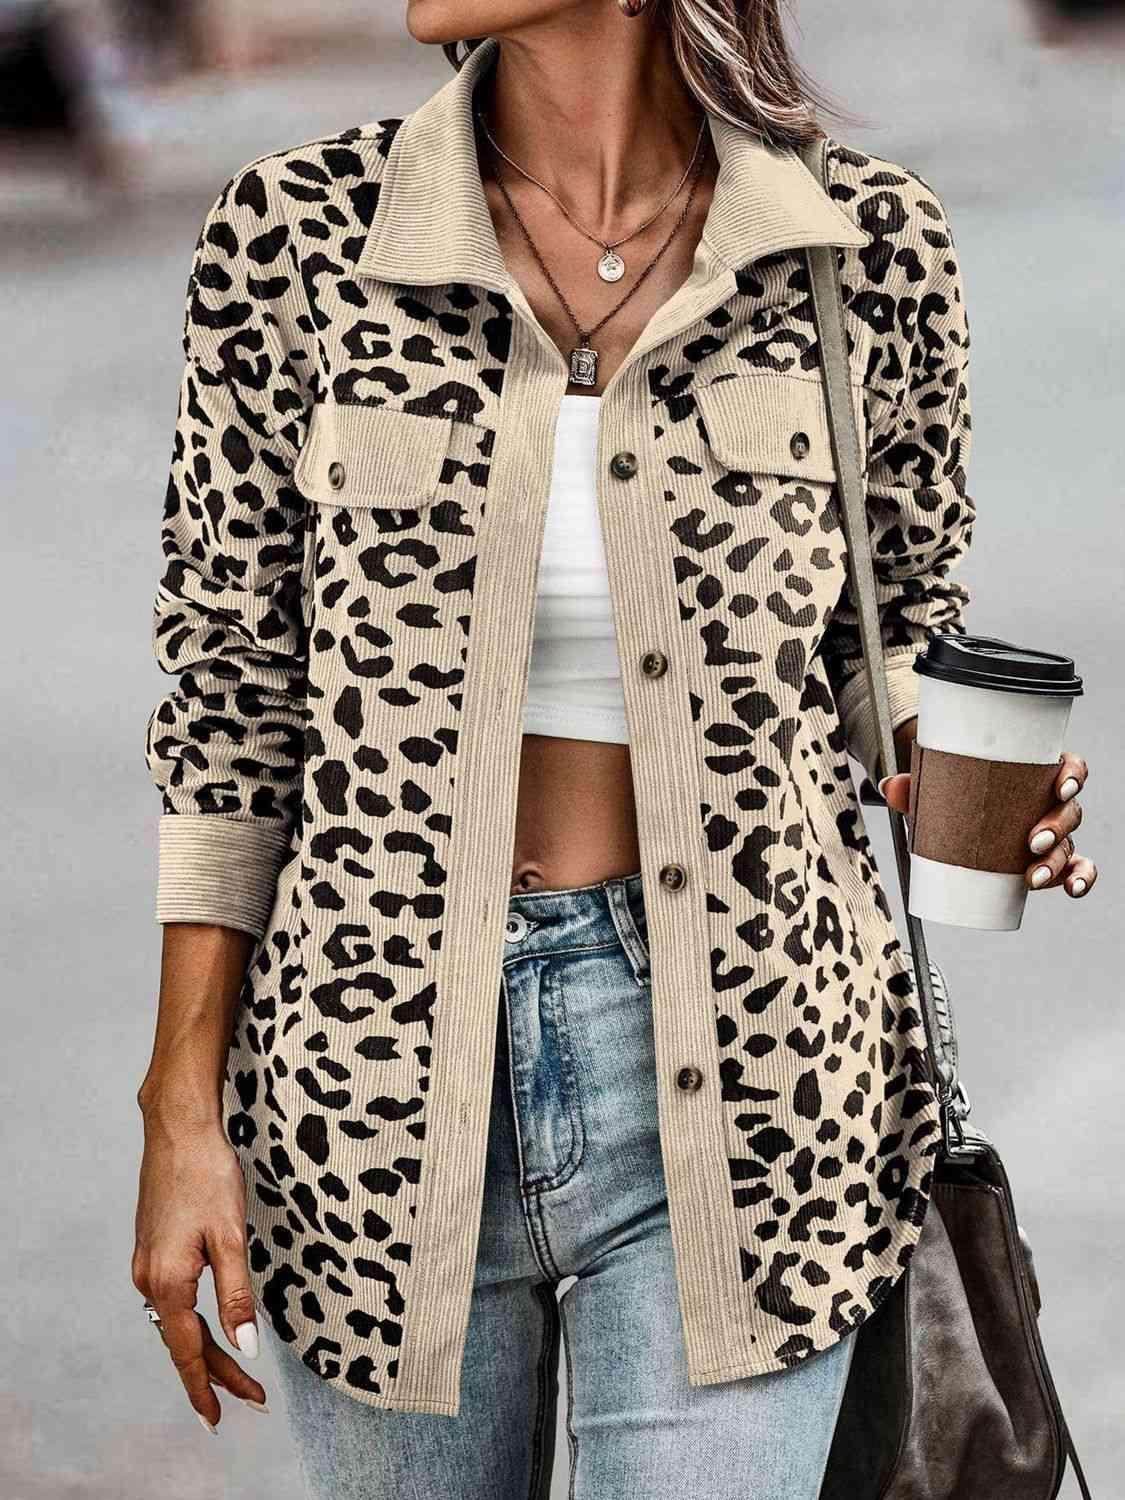 Bona Fide Fashion - Full Size Leopard Buttoned Jacket - Women Fashion - Bona Fide Fashion